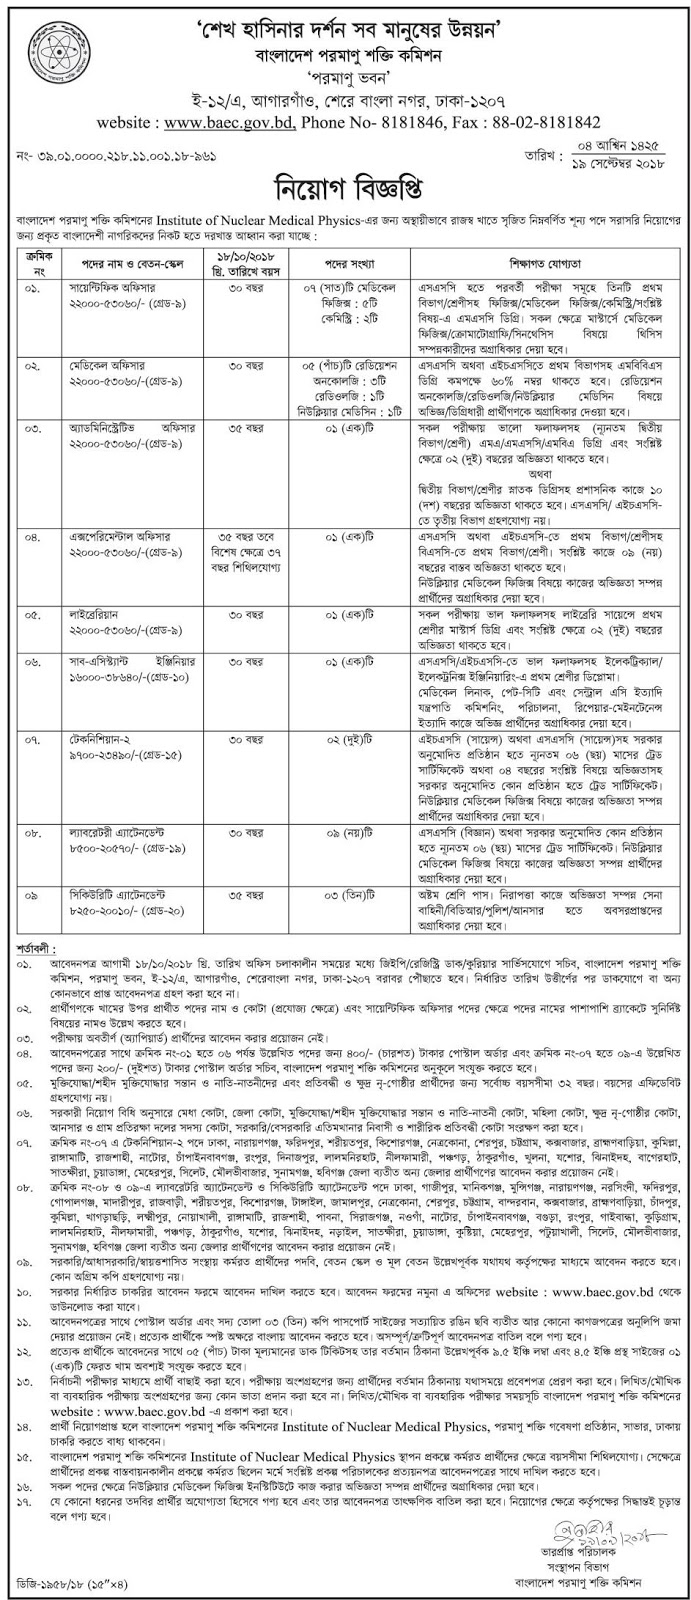 Bangladesh Atomic Energy Commission ( BAEC) job circular 2018 